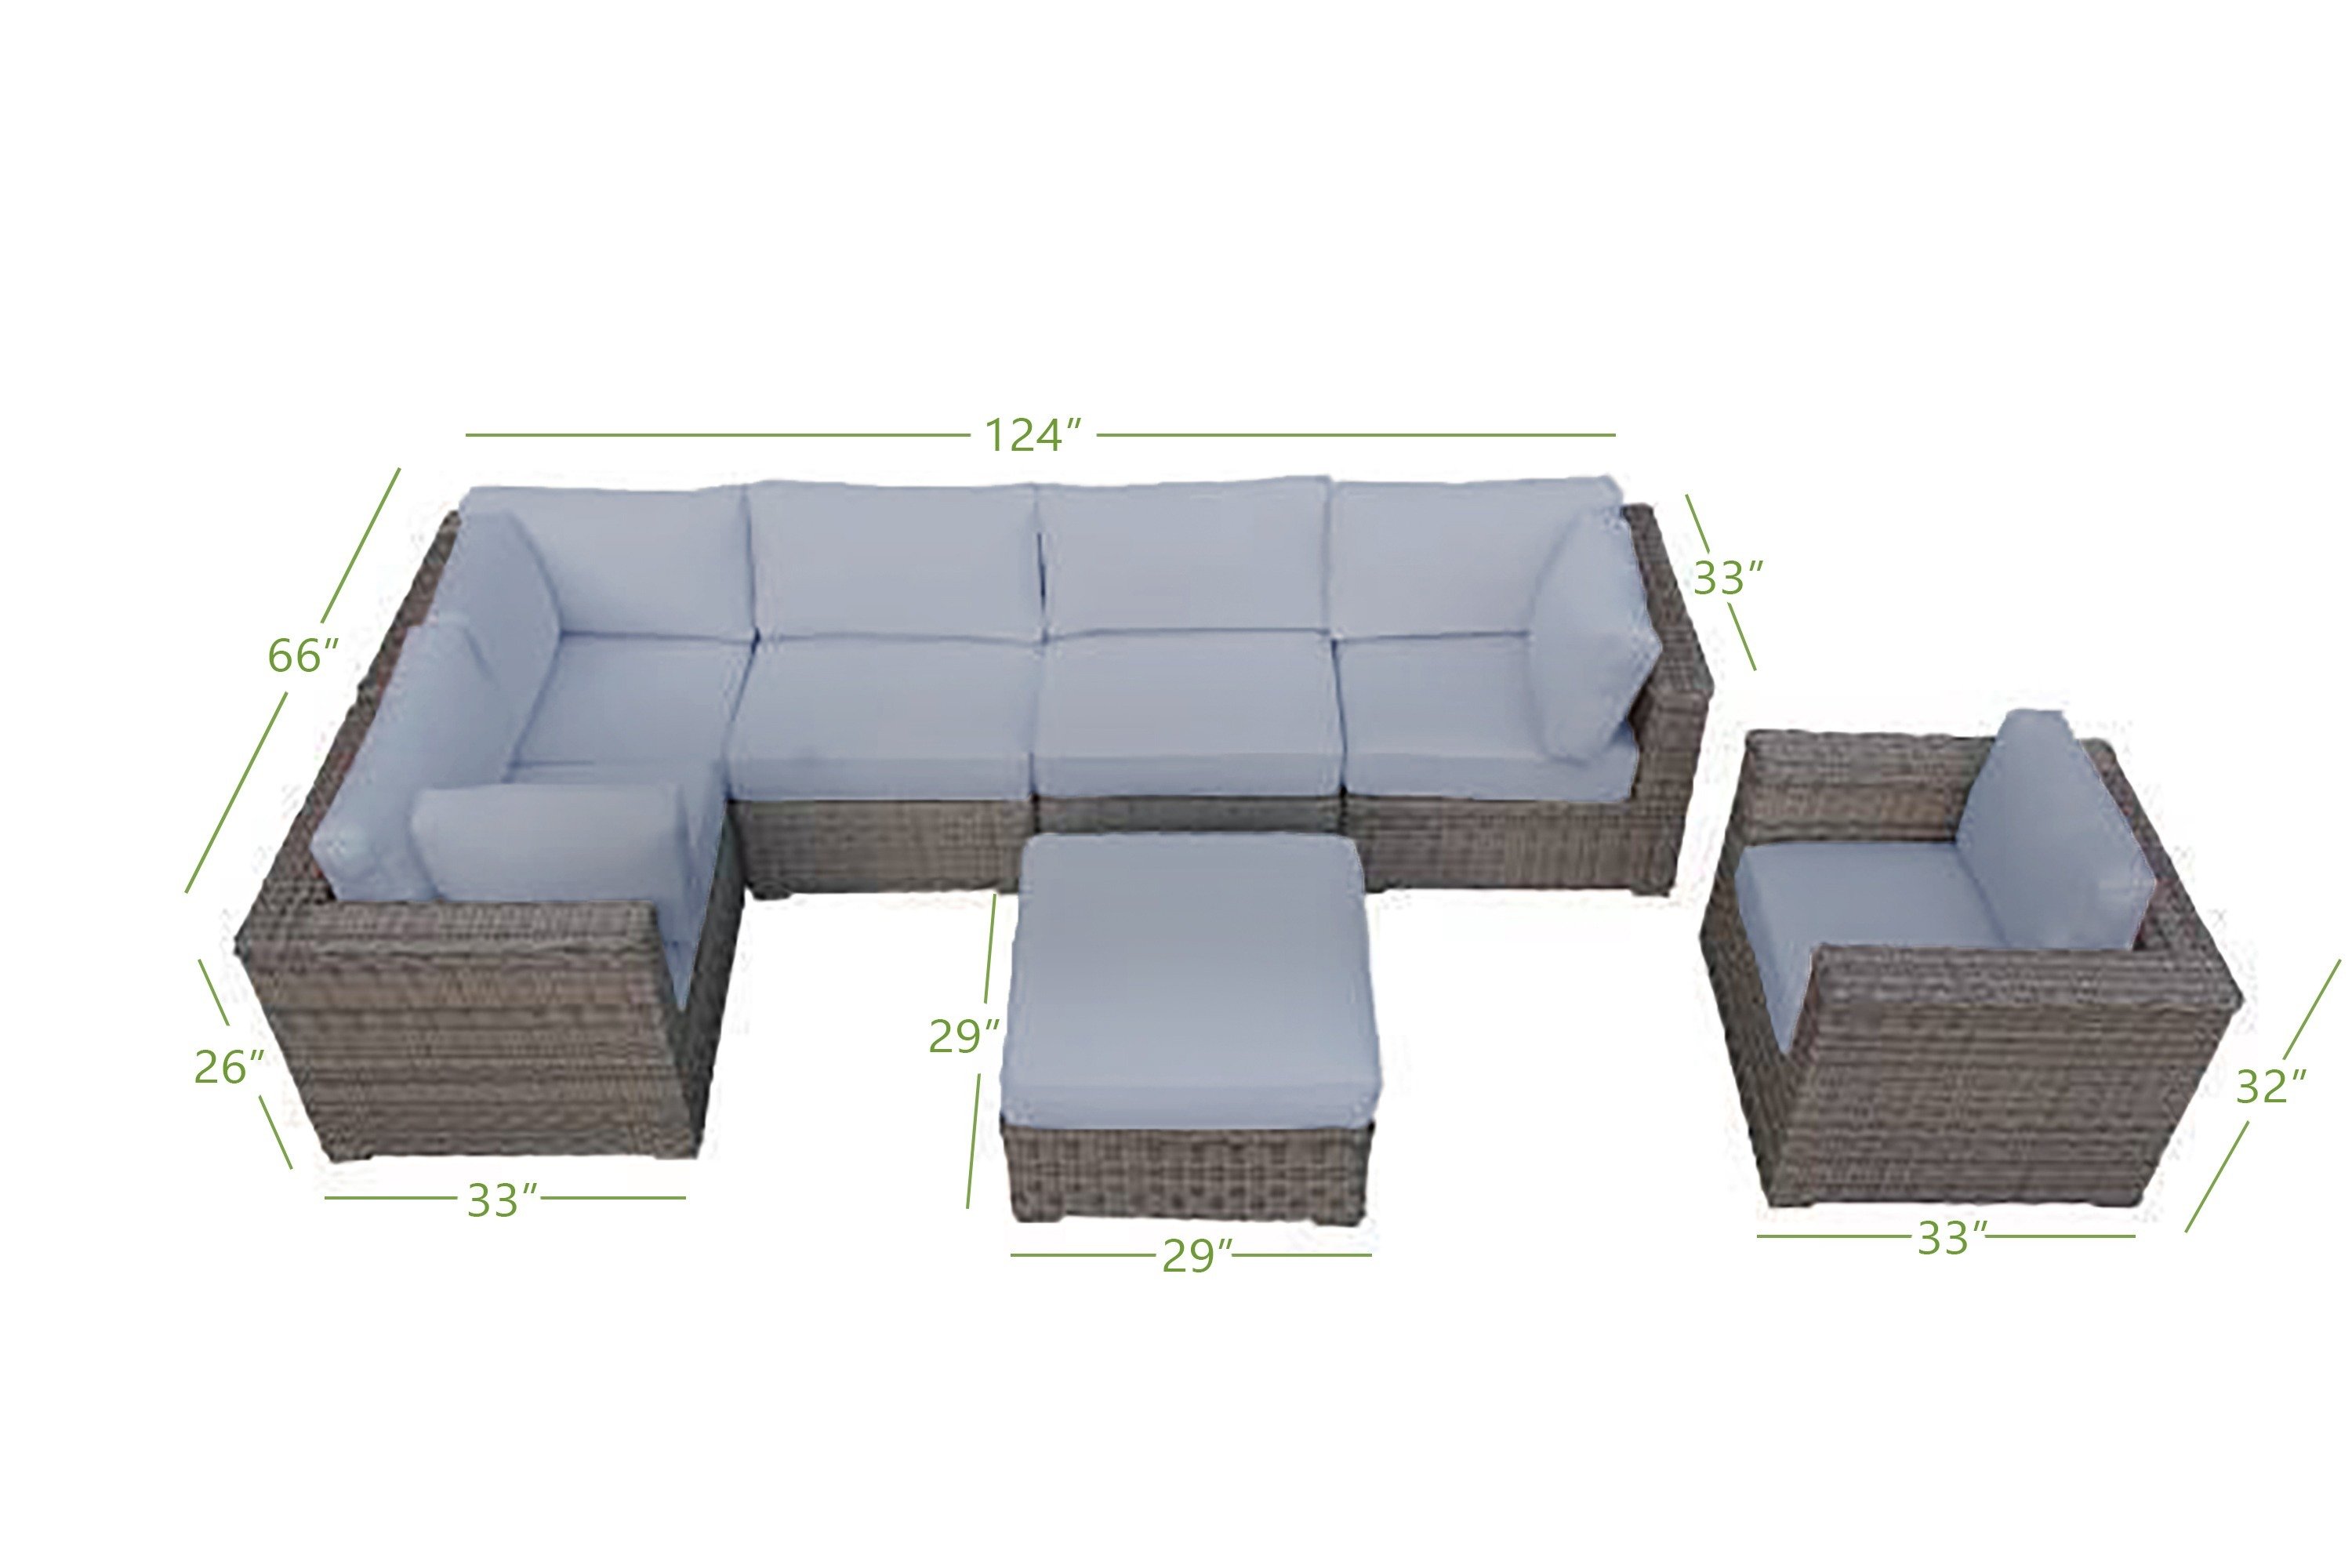 8 seater sofa dimensions